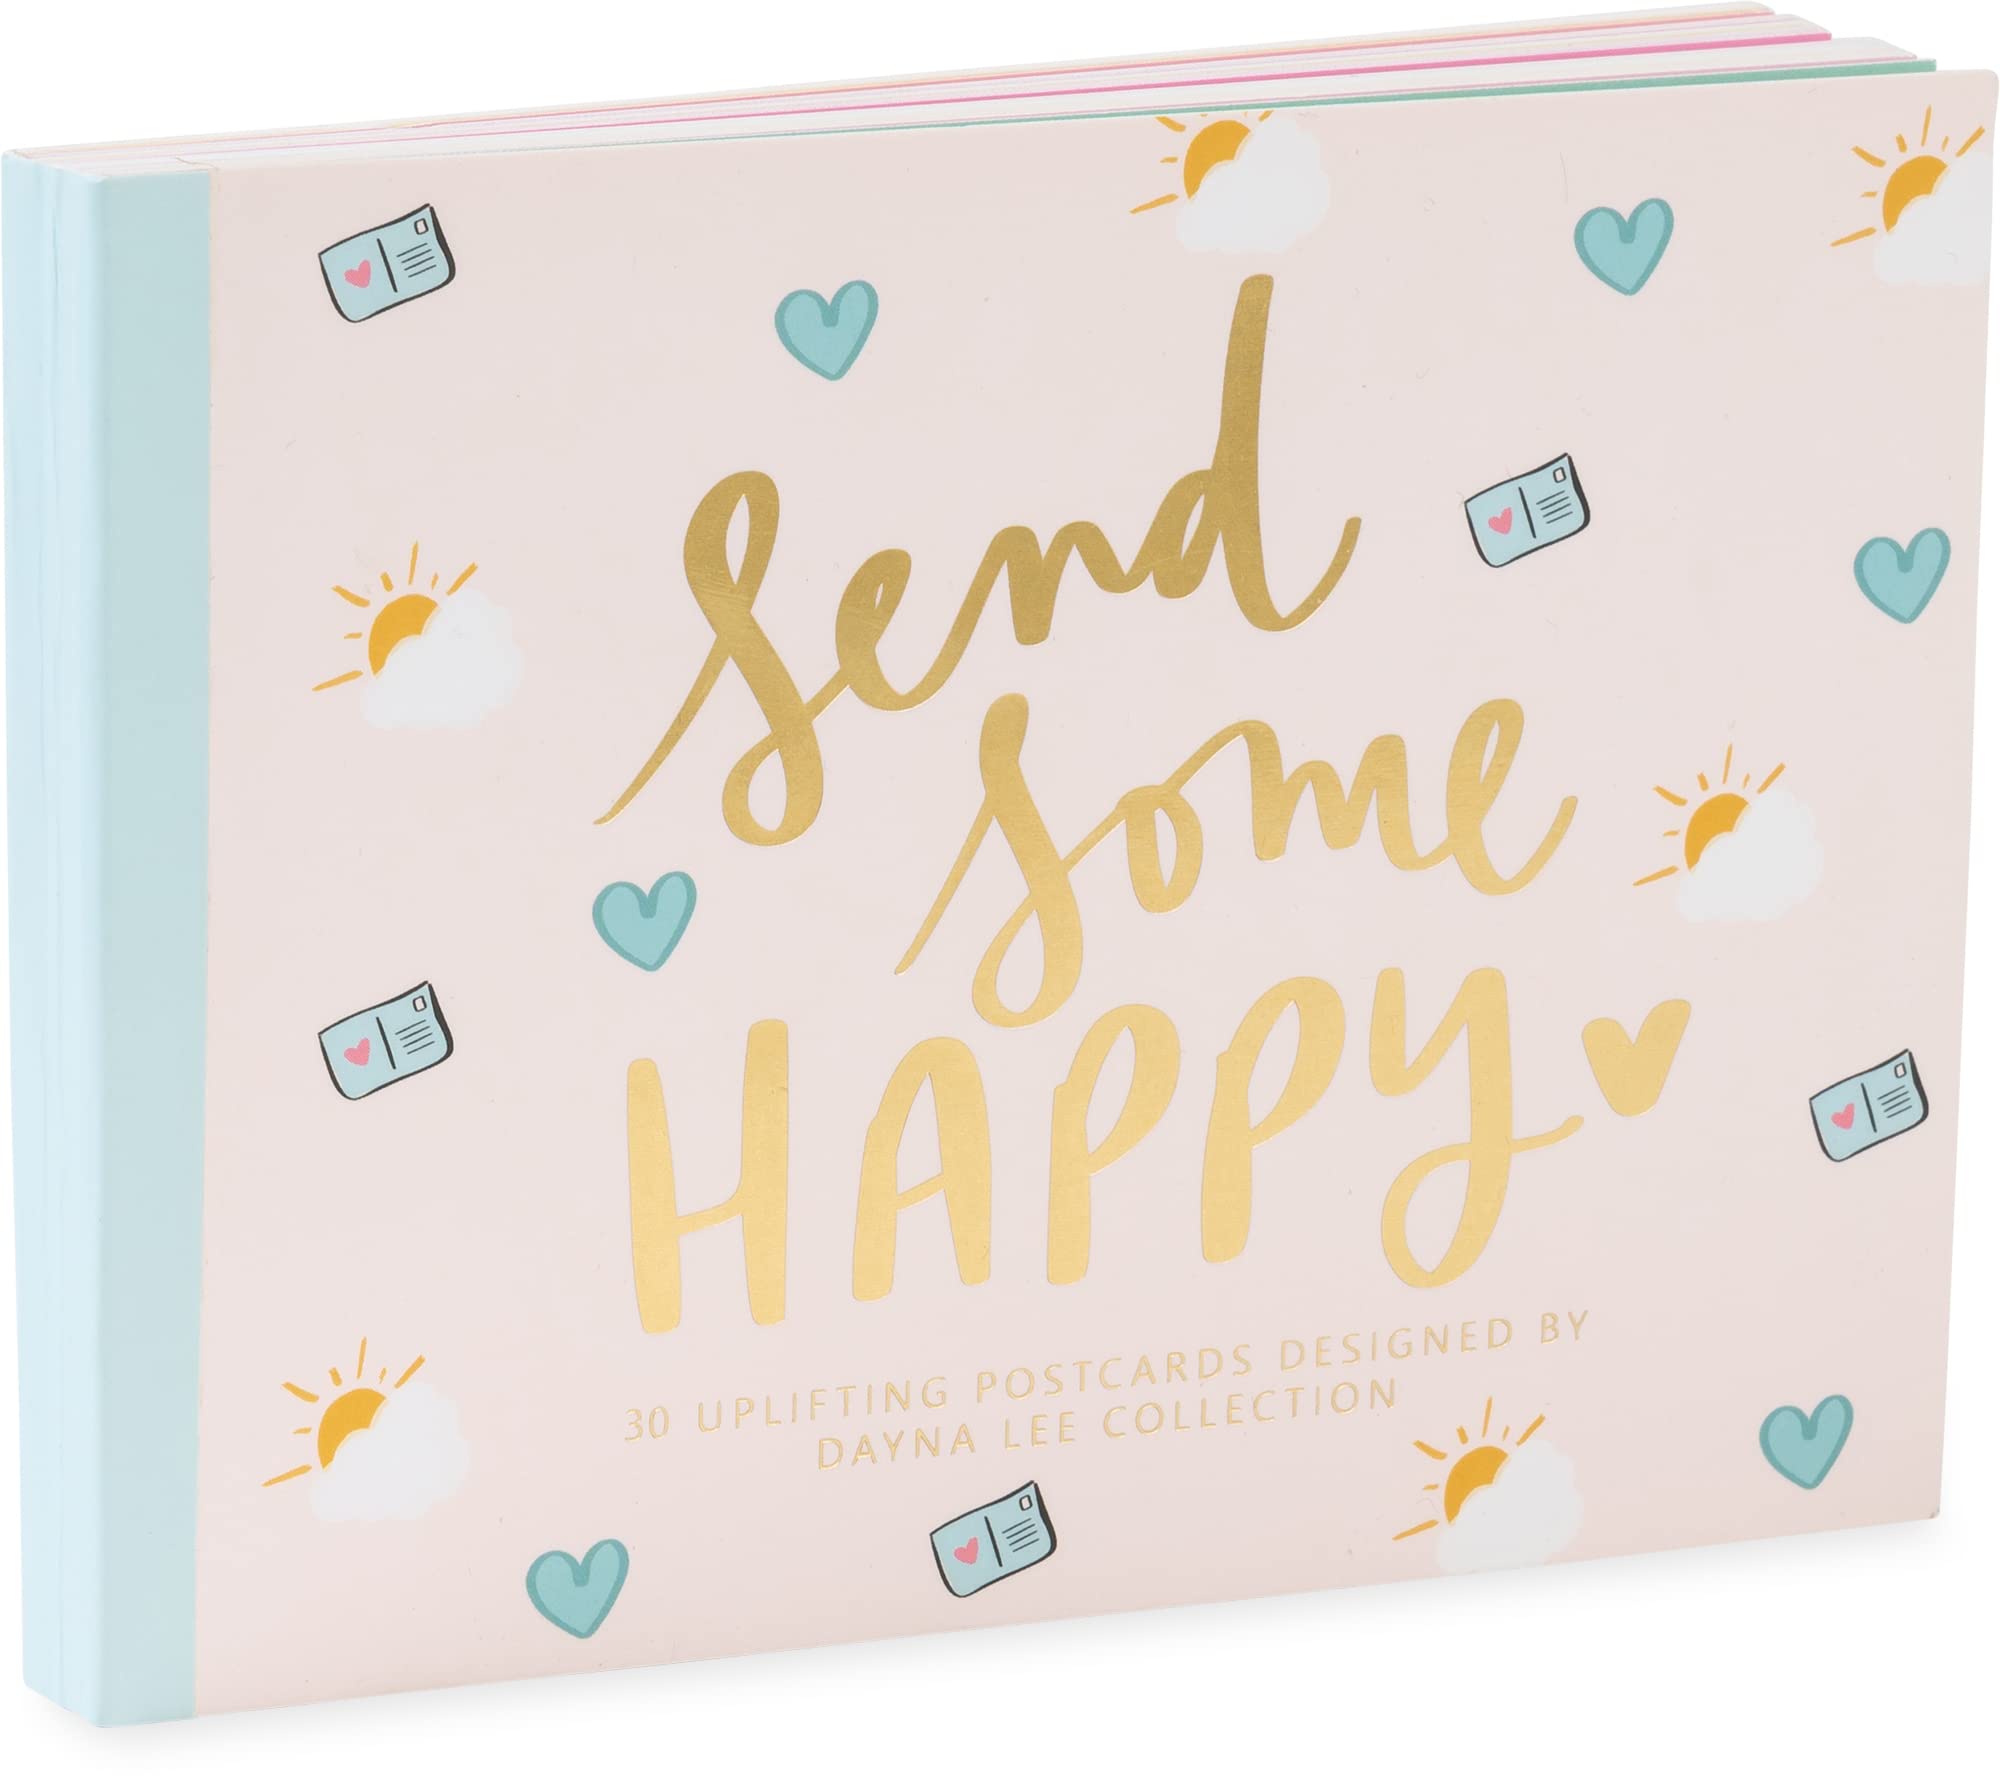 Send Some Happy Inspirational Postcards